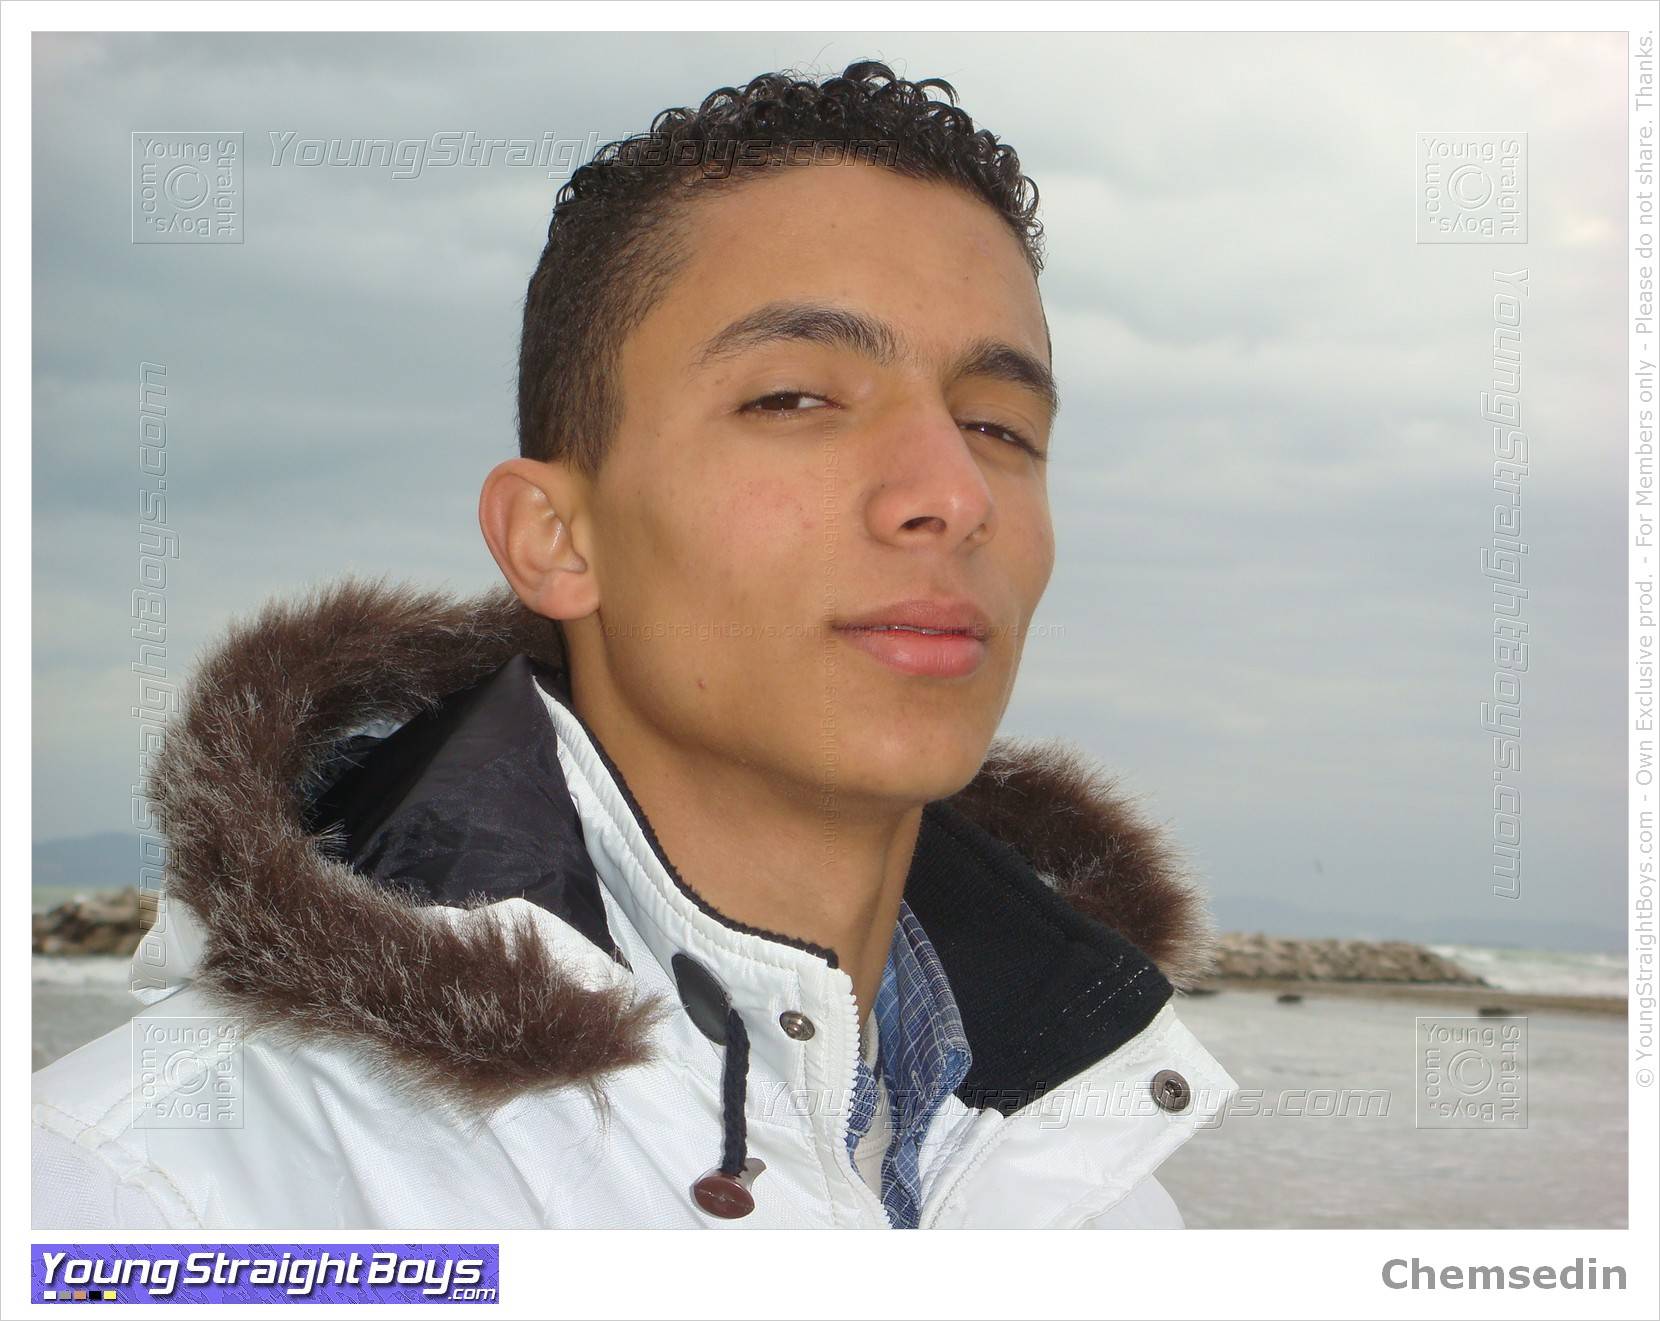 Chemsedin på stranden, en stilig str8 ung arabisk pojke som jag kunde suga :-)